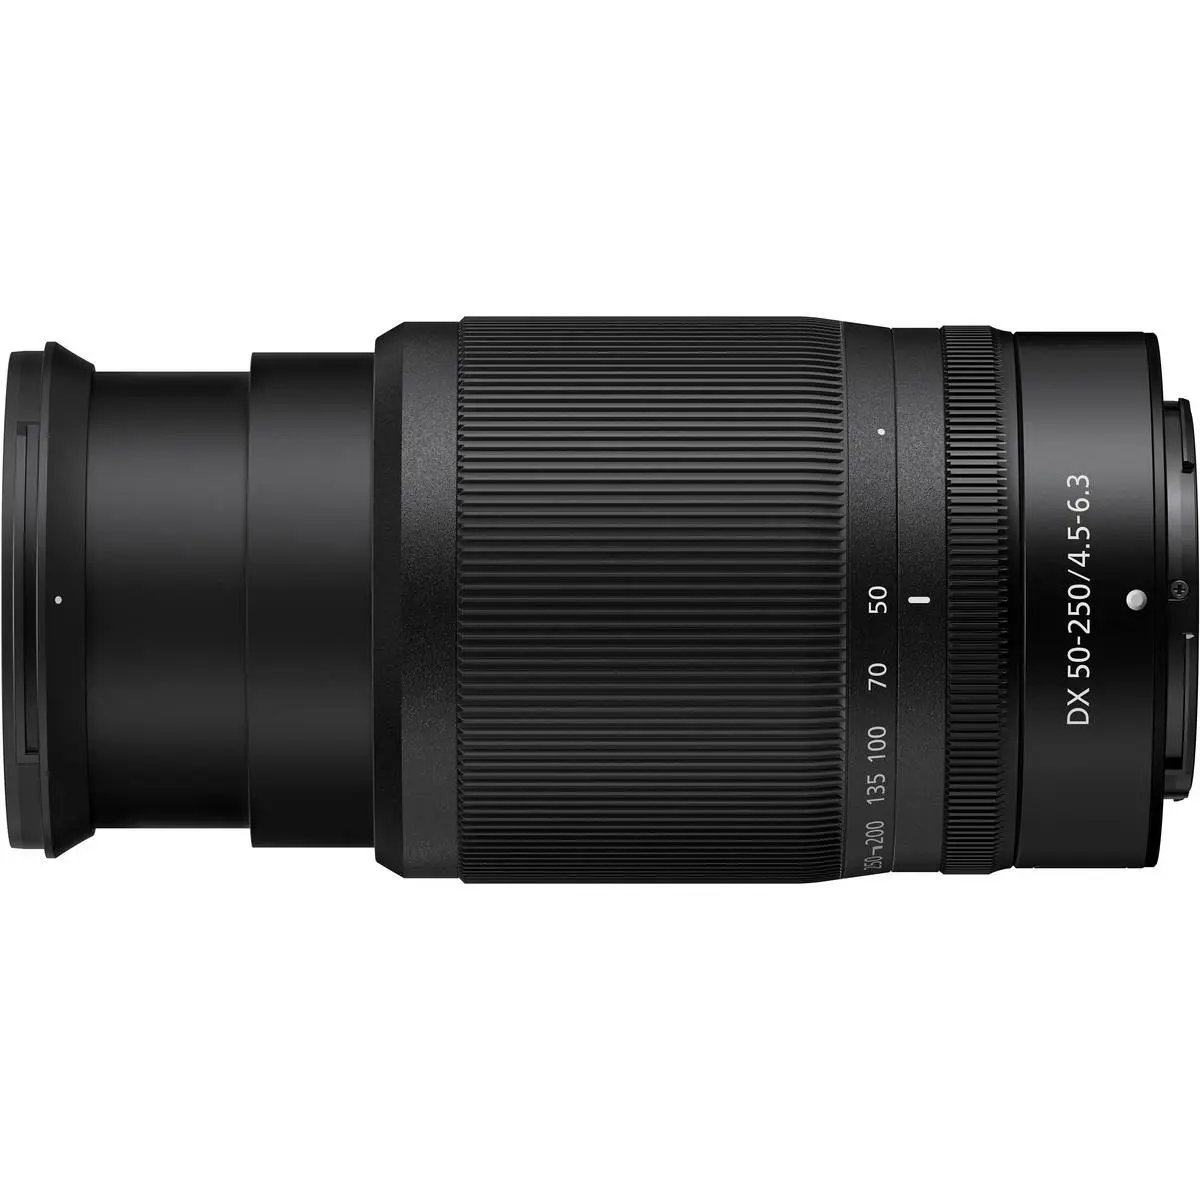 1. Nikon NIKKOR Z DX 50-250MM F/4.5-6.3 VR (kit lens) Lens